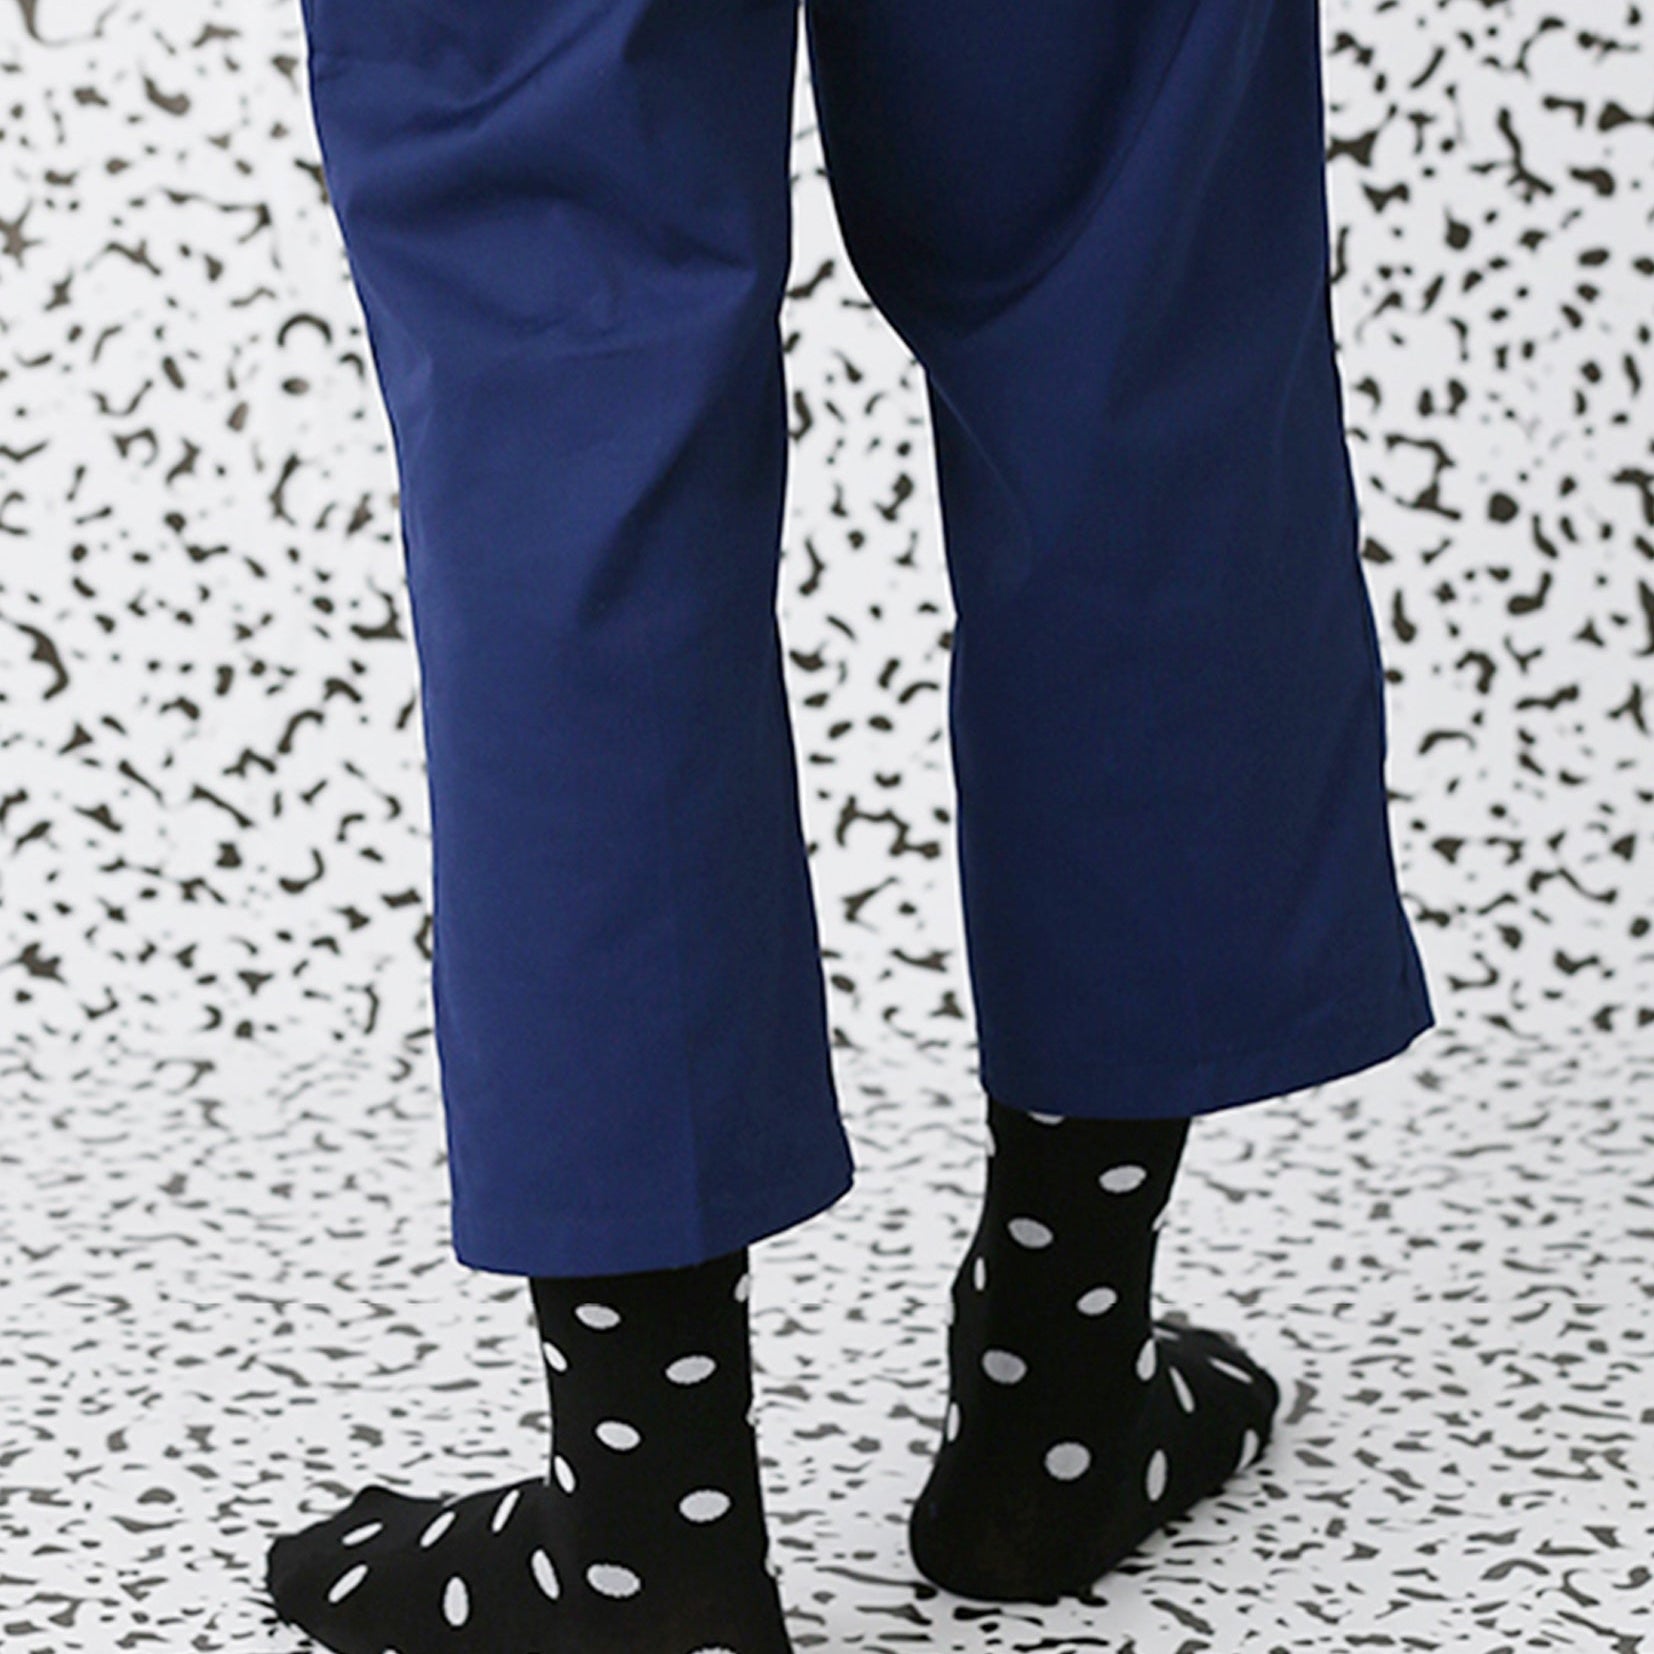 Big polka dot mid-calf socks - black